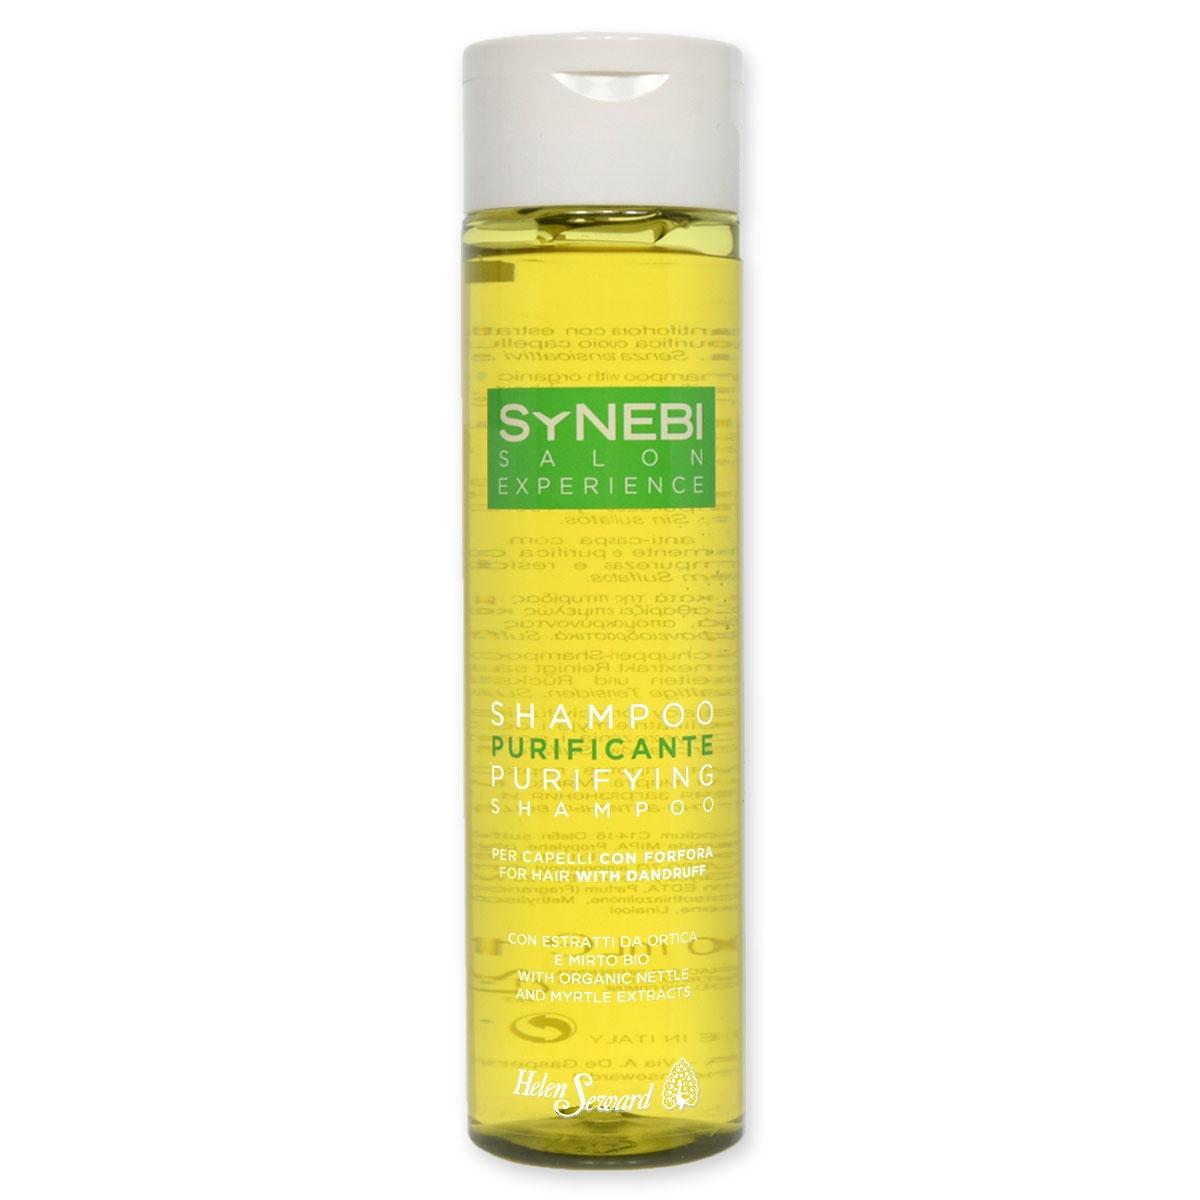 Helen seward synebi shampoo purificante 300 ml